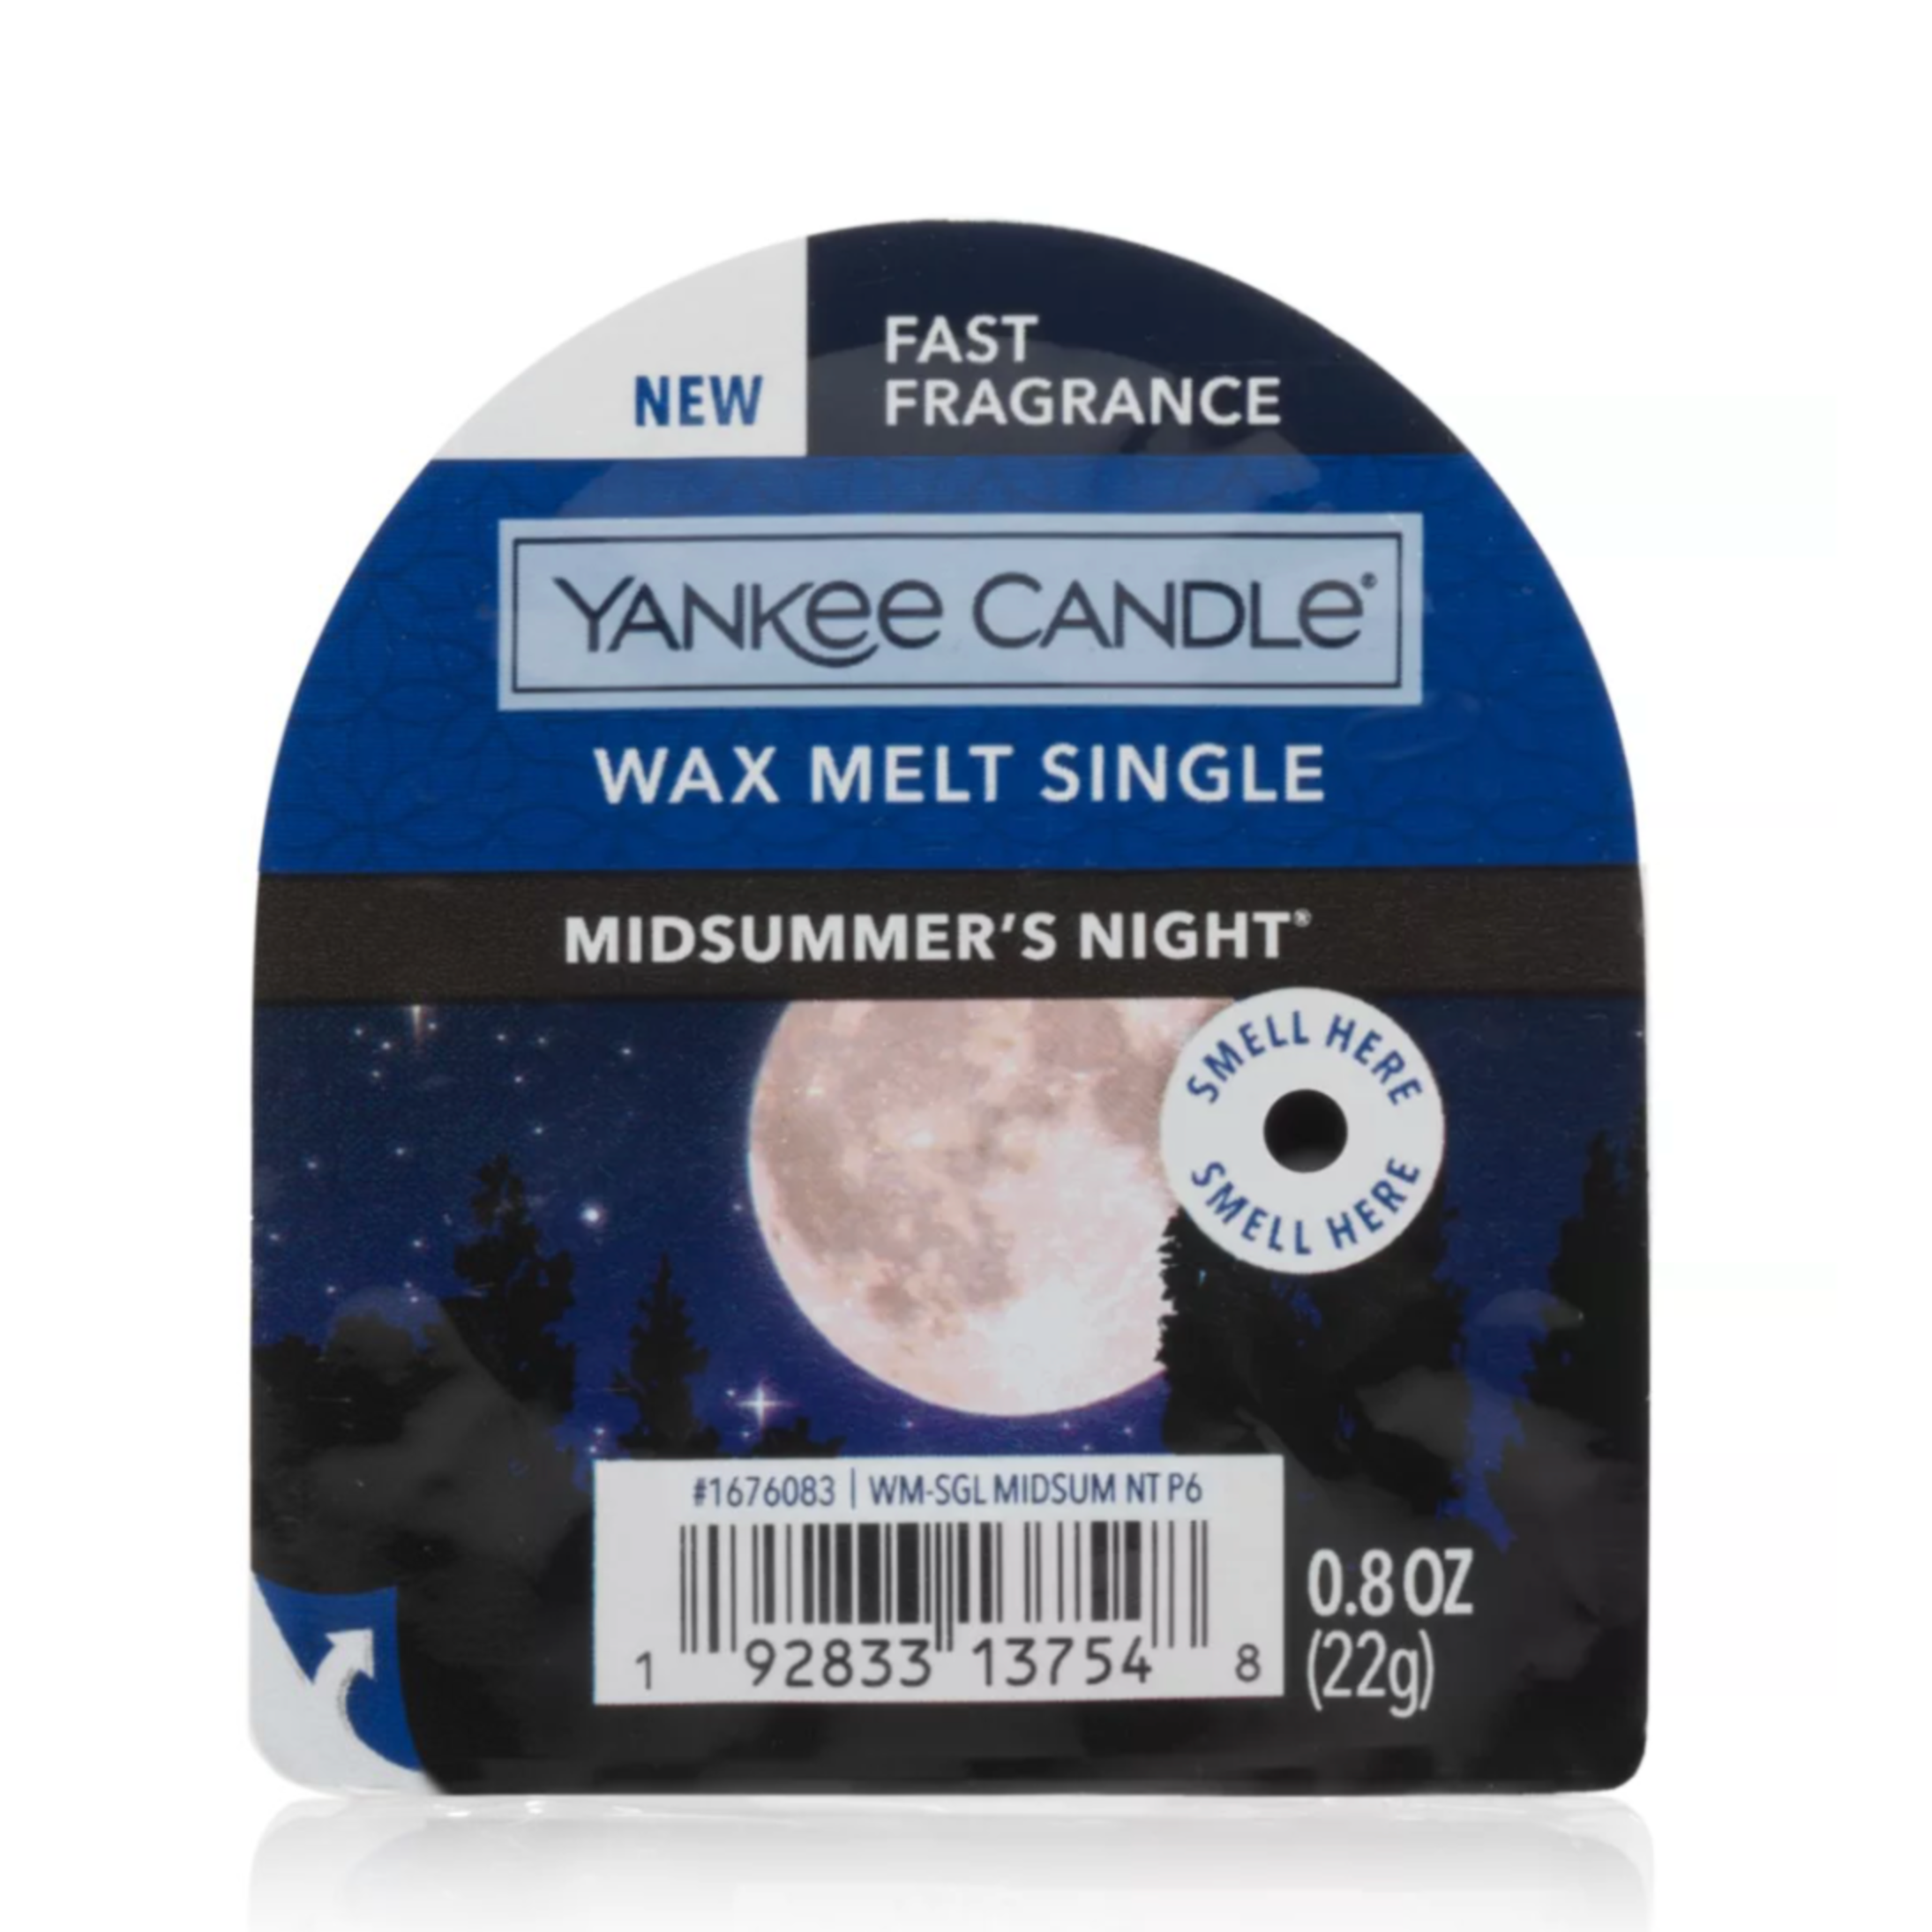 MidSummer's Night Wax Melt Single